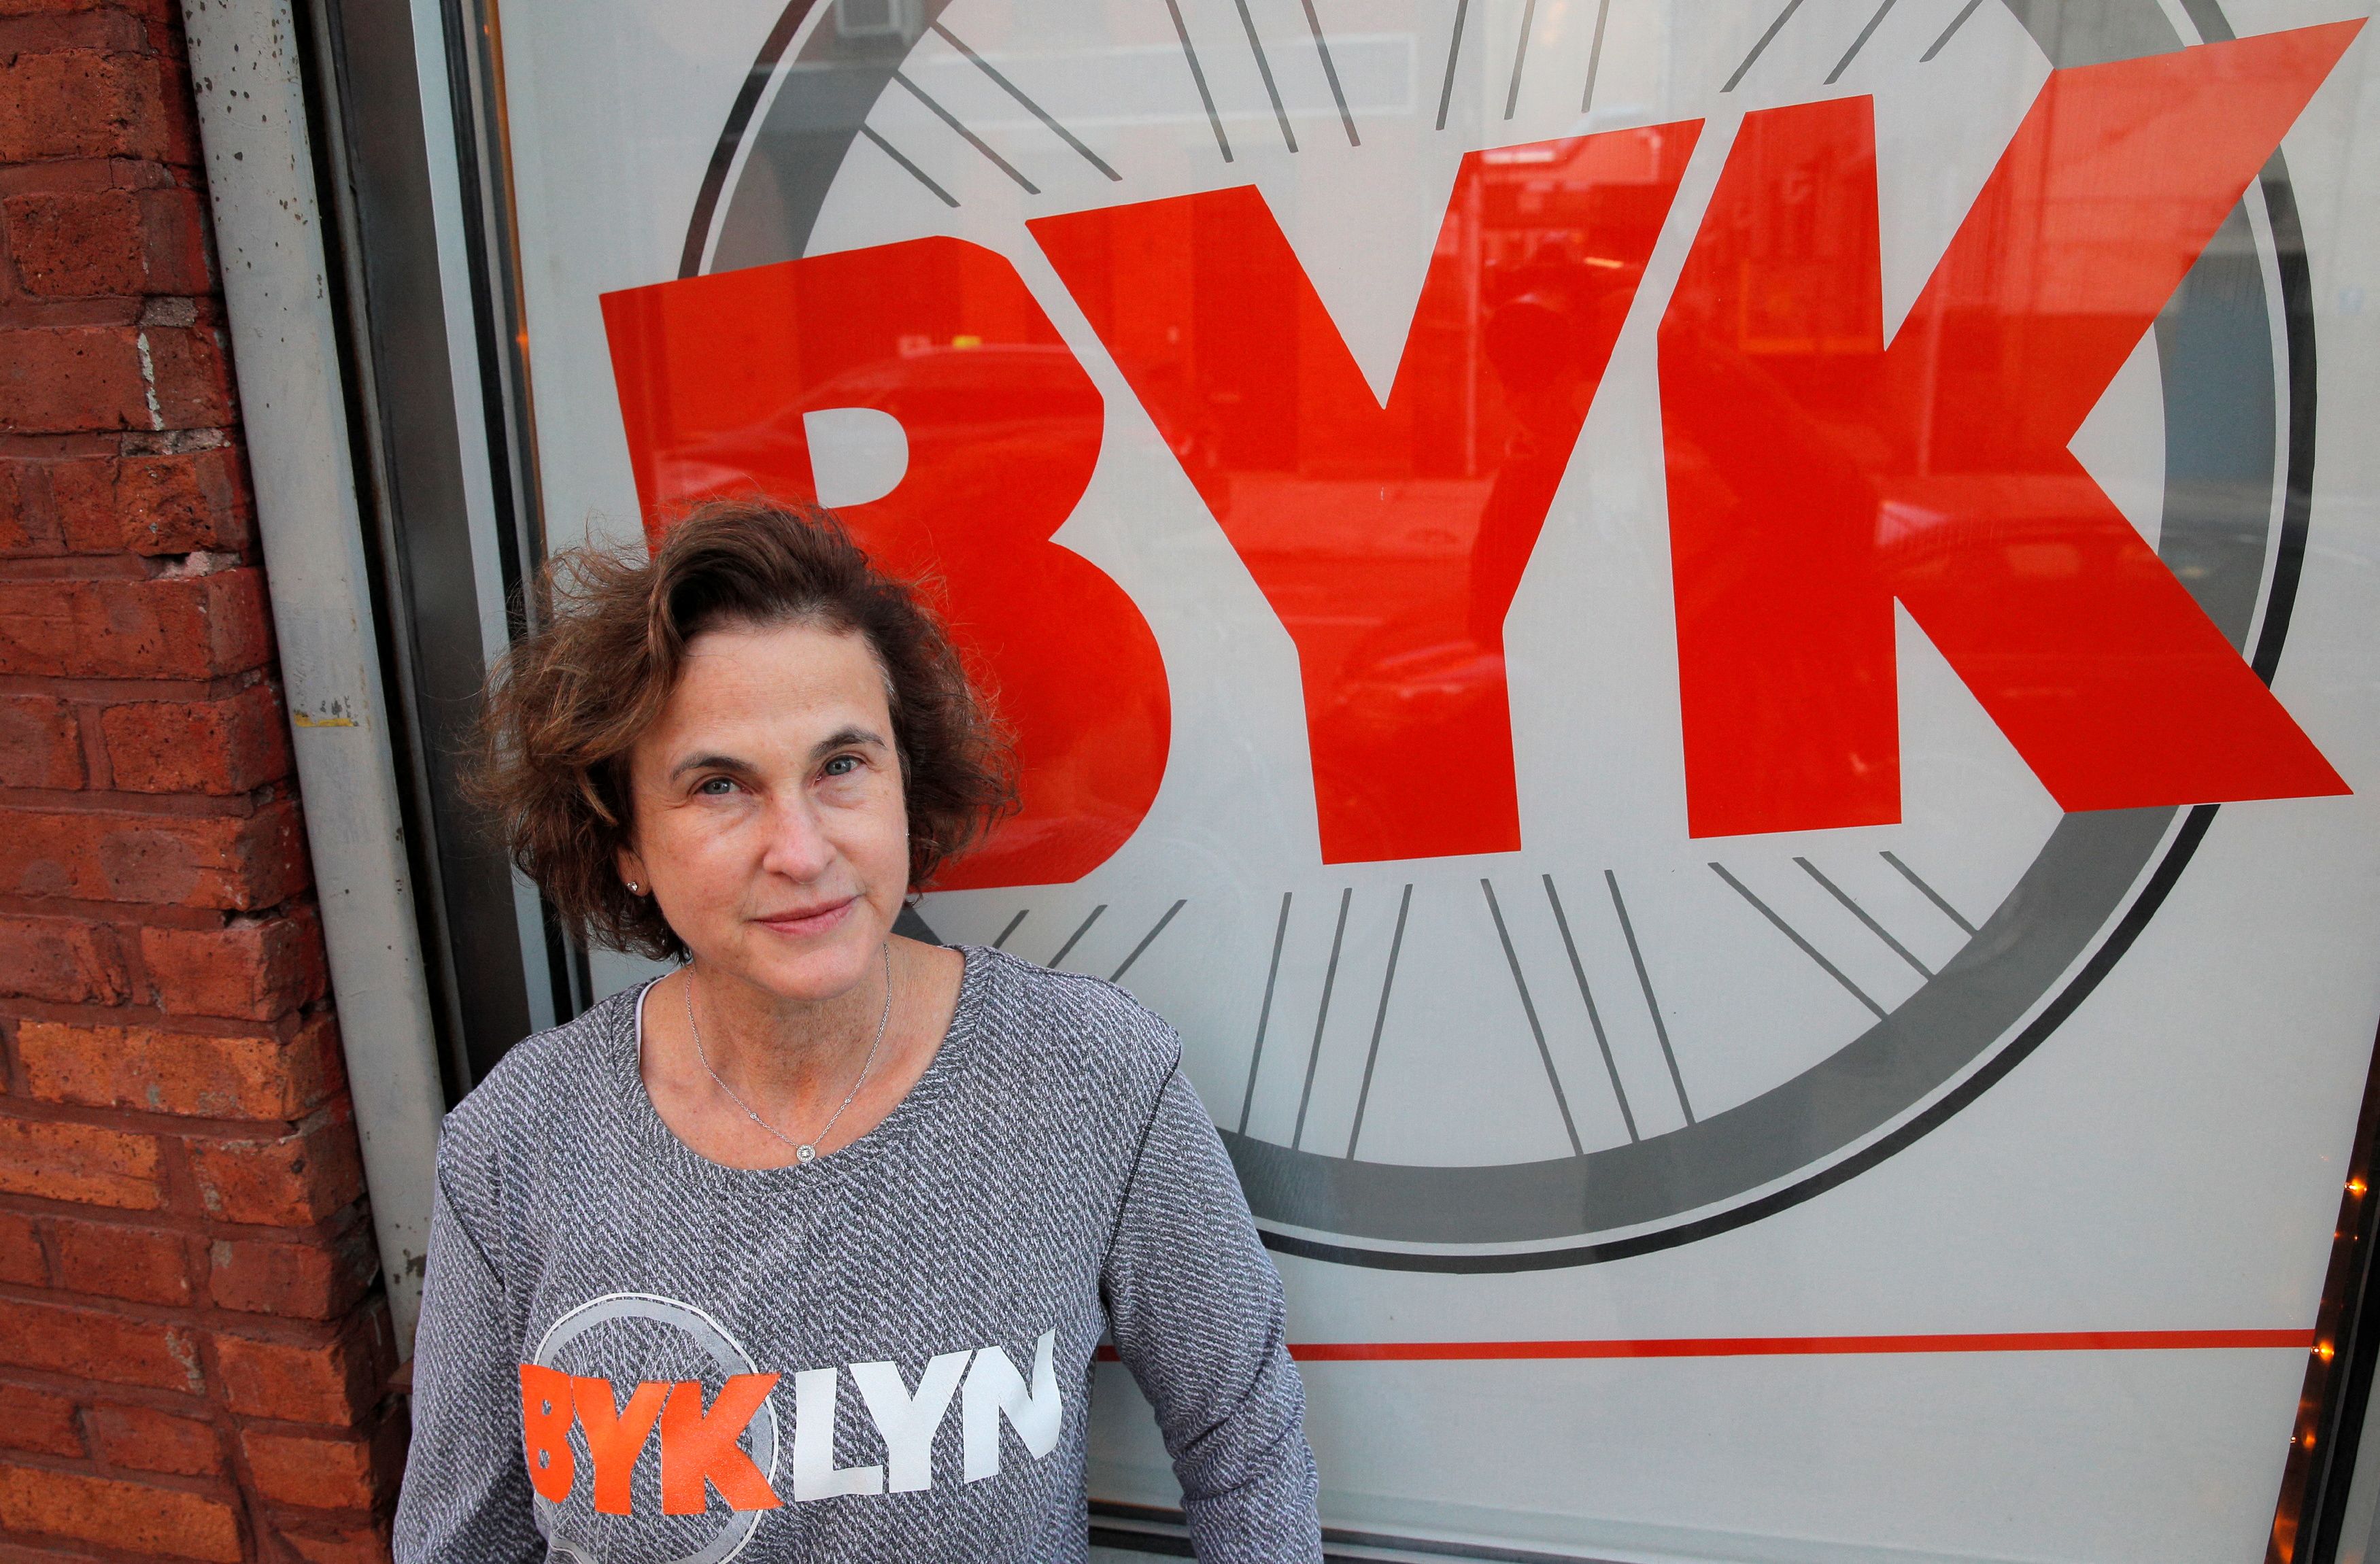 Amy Glosser poses outside her cycling studio, BYKlyn, in Brooklyn, New York, U.S., January 14, 2022. Picture taken January 14, 2022.REUTERS/Brendan McDermid